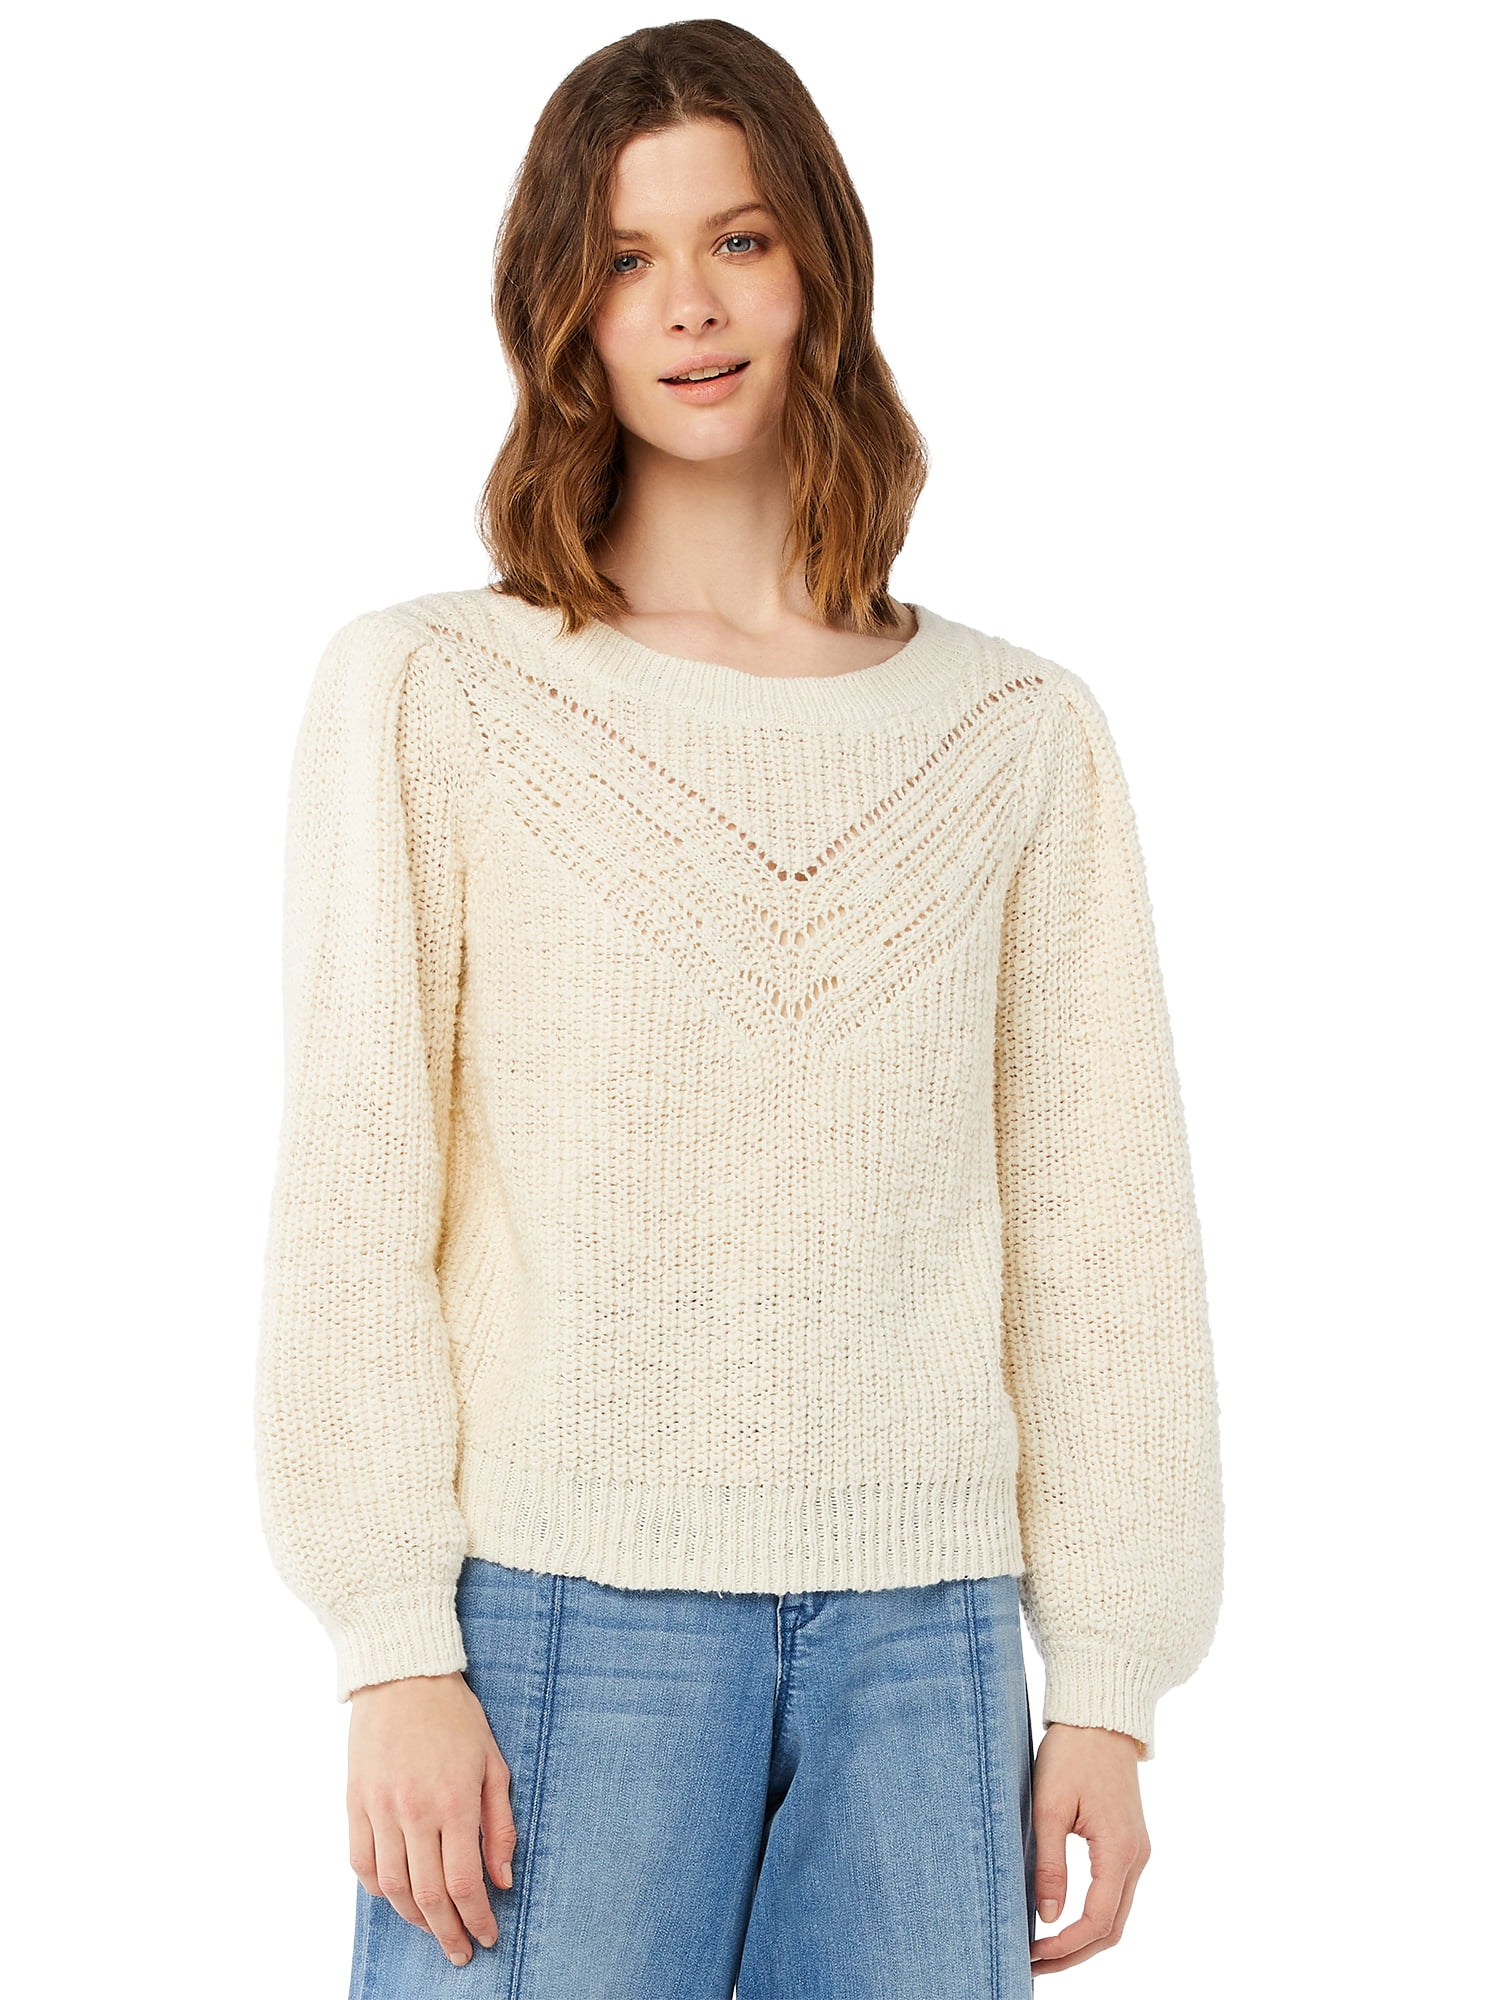 Scoop Women's Slub Cotton Pointelle Sweater - Walmart.com